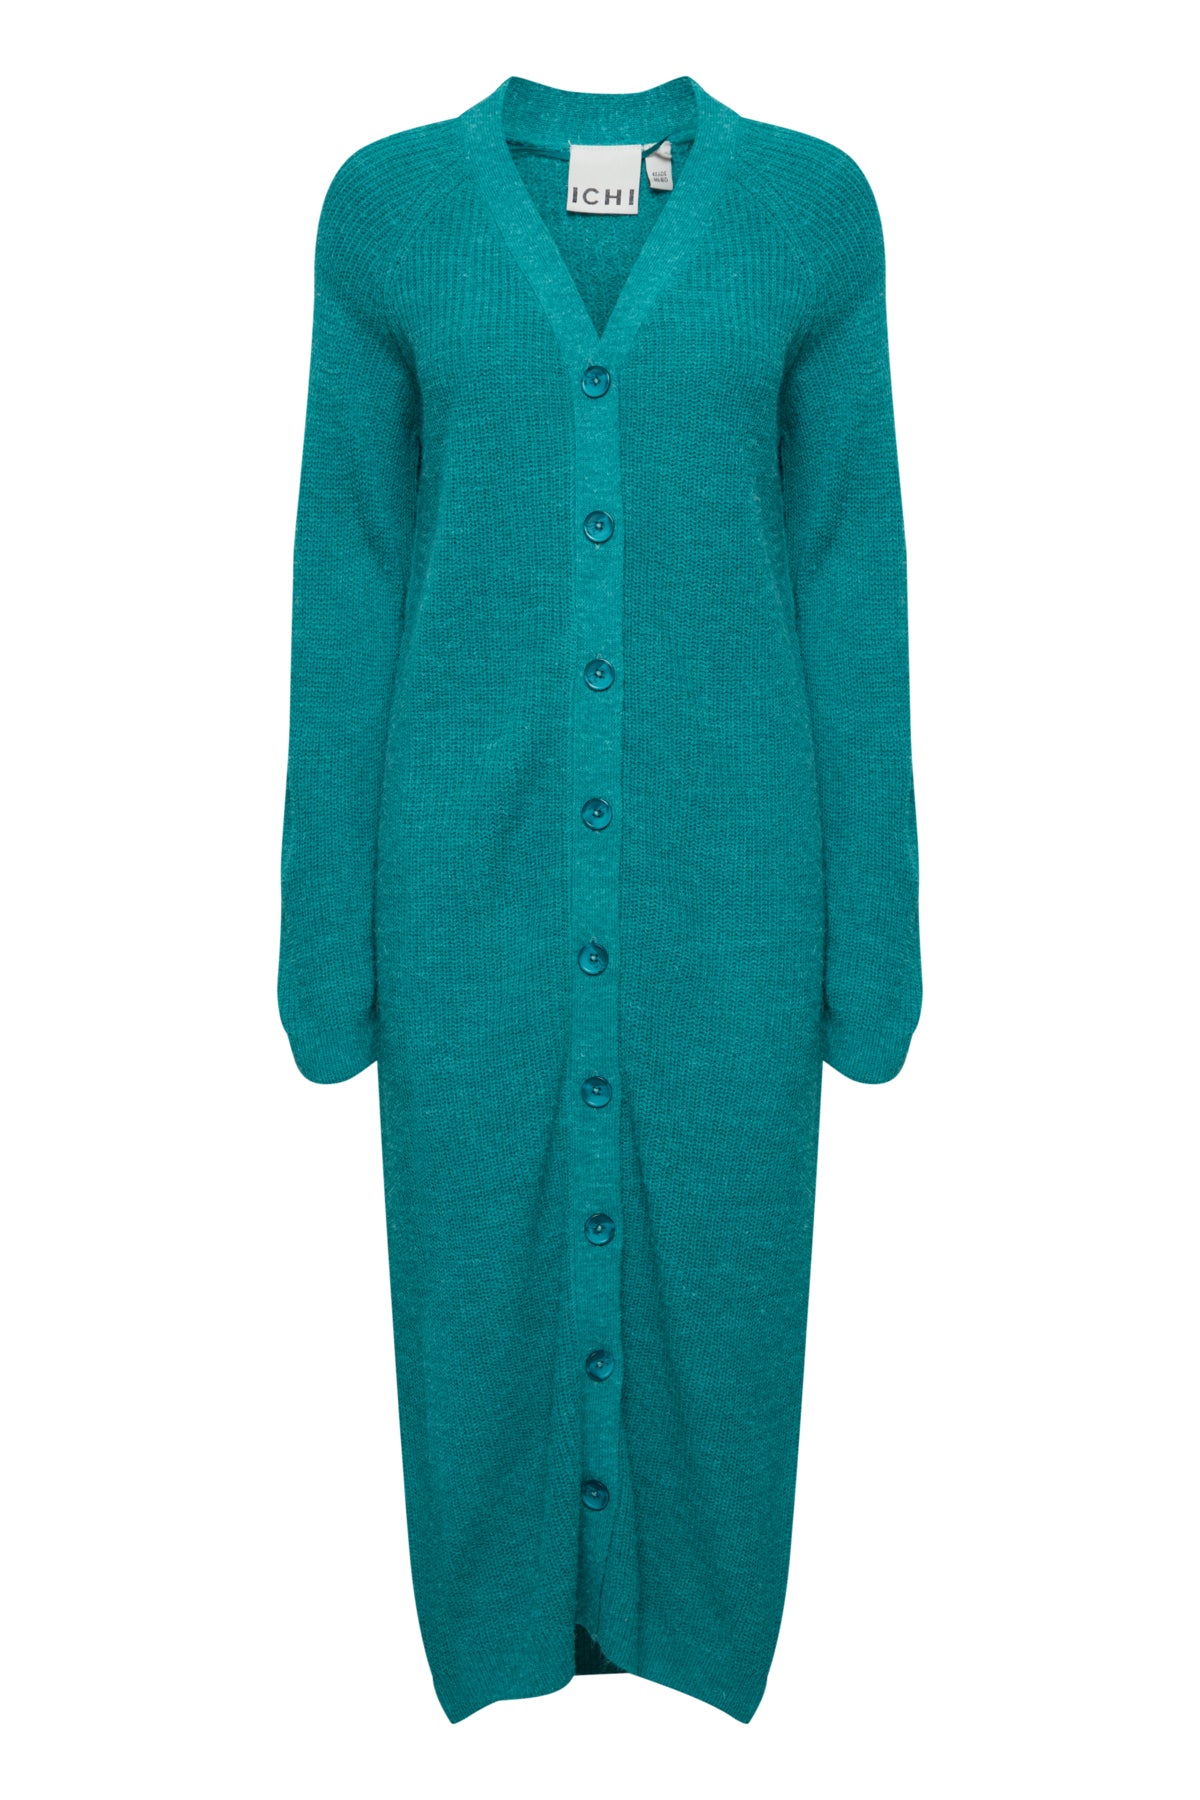 ICHI - Cardigan / knitted dress Novo Quetzal Green